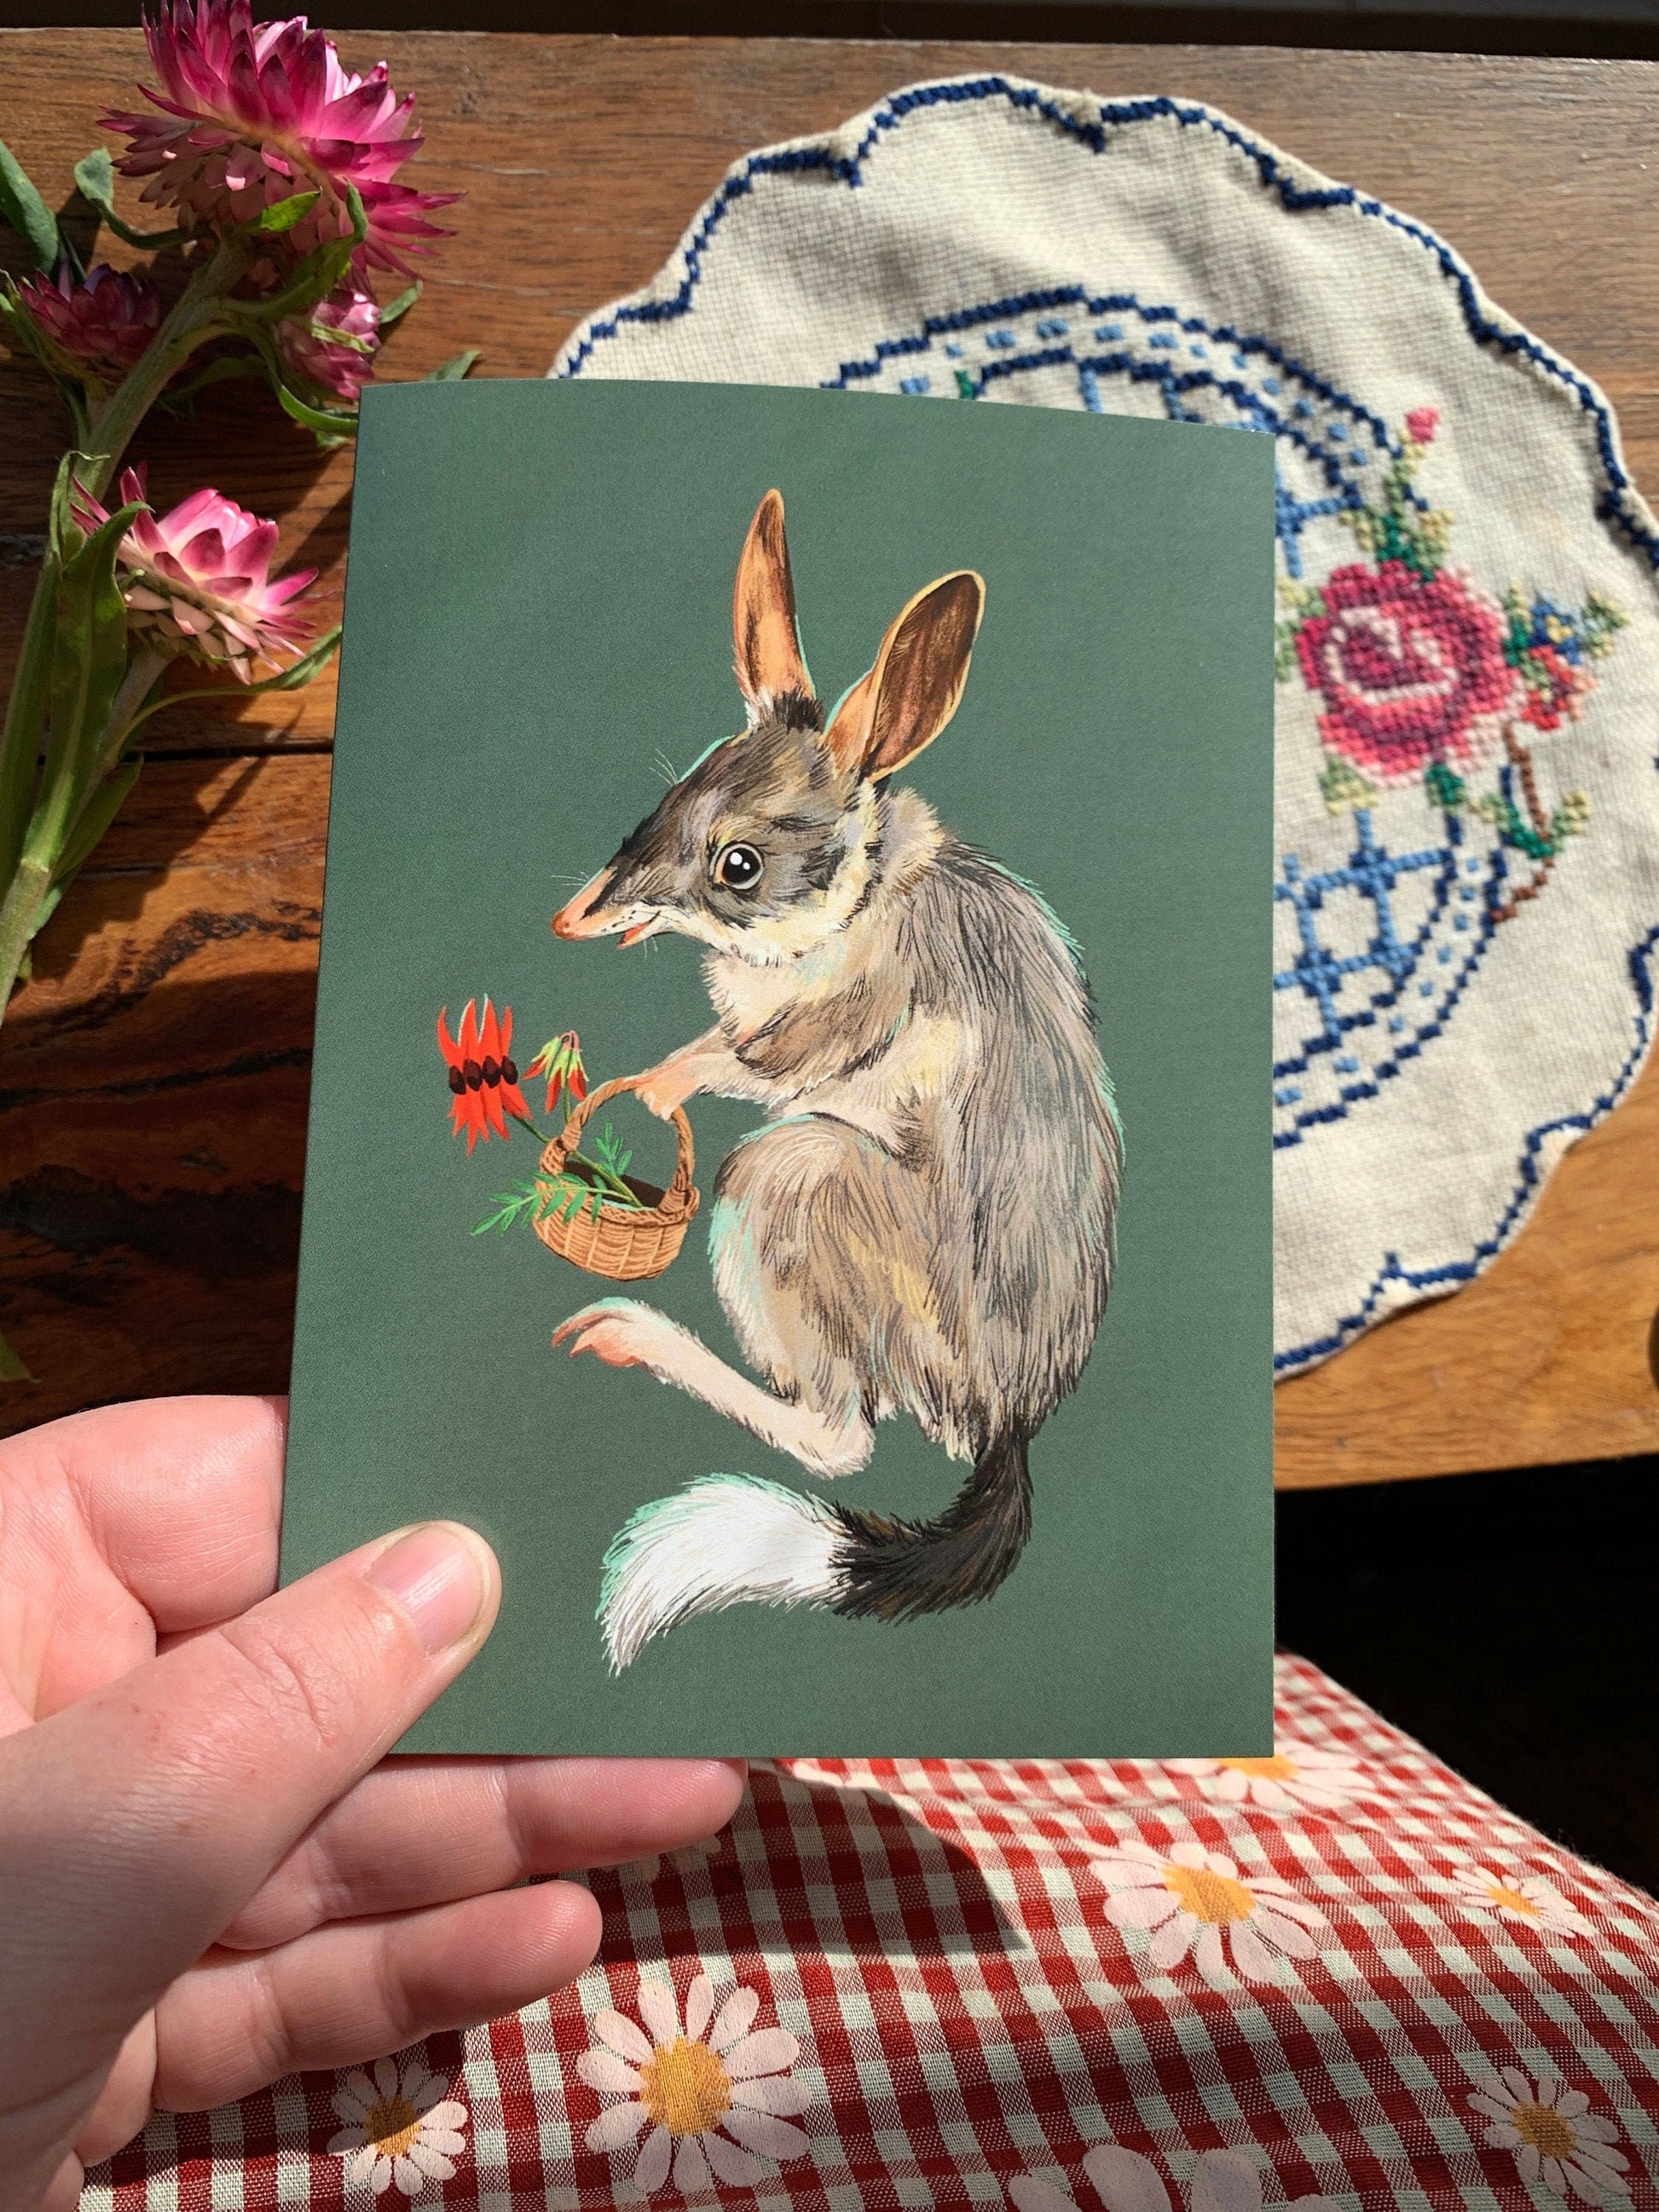 Anna Seed Art | Greeting Card - Bilby Basket. Cute illustration